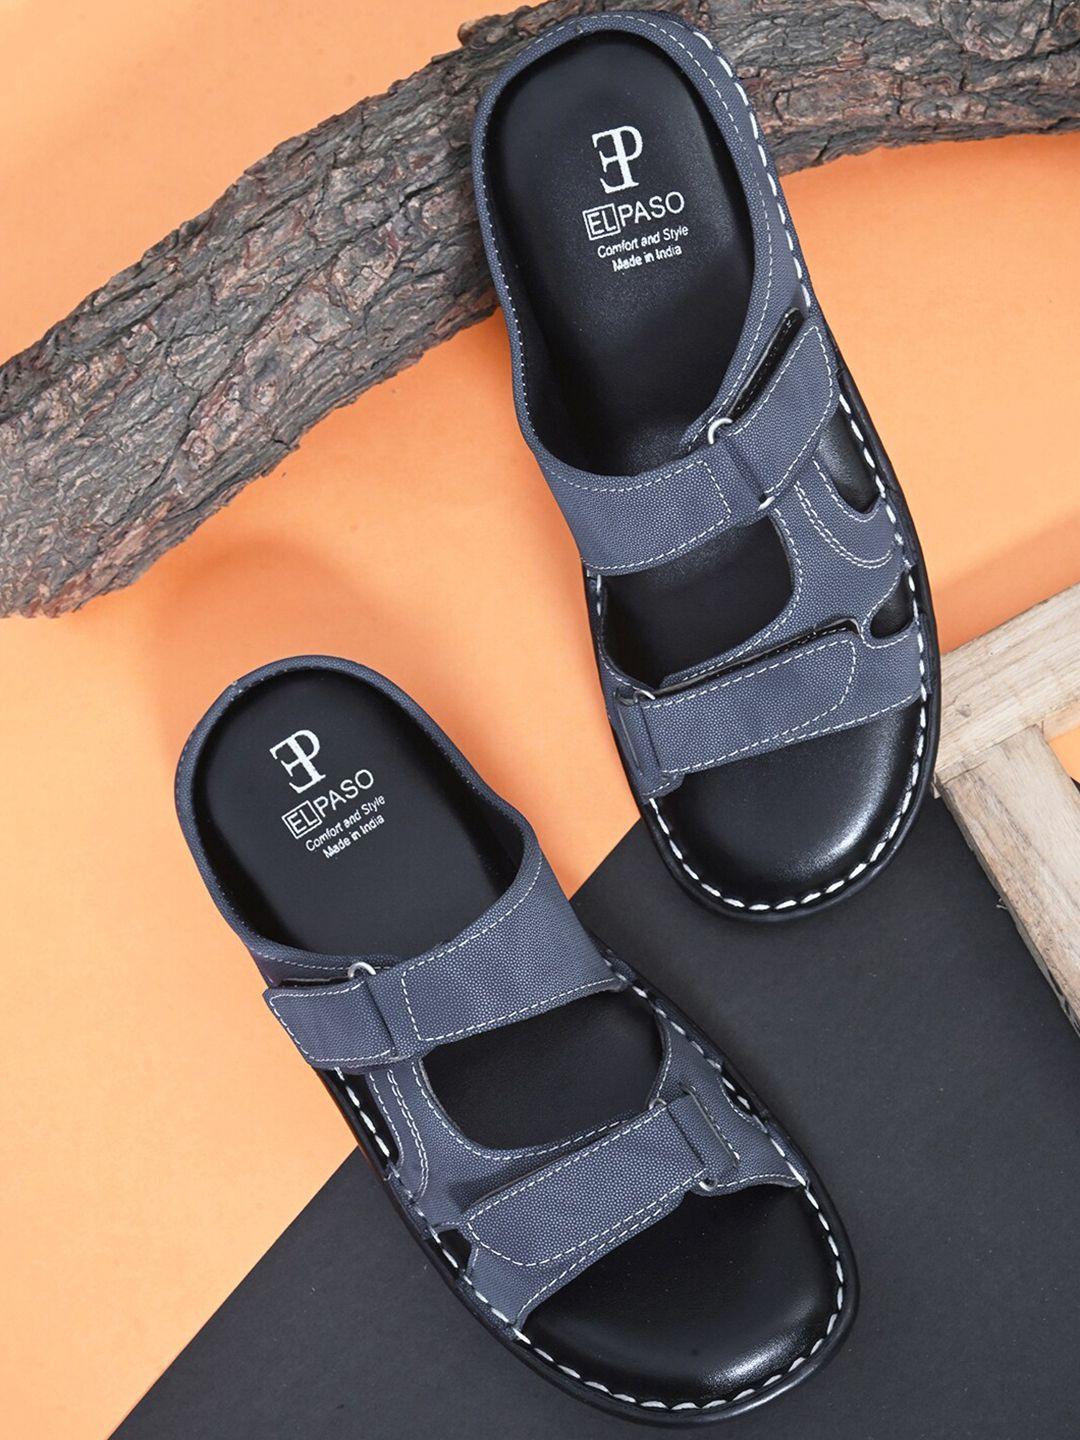 el-paso-men-open-toe-comfort-sandals